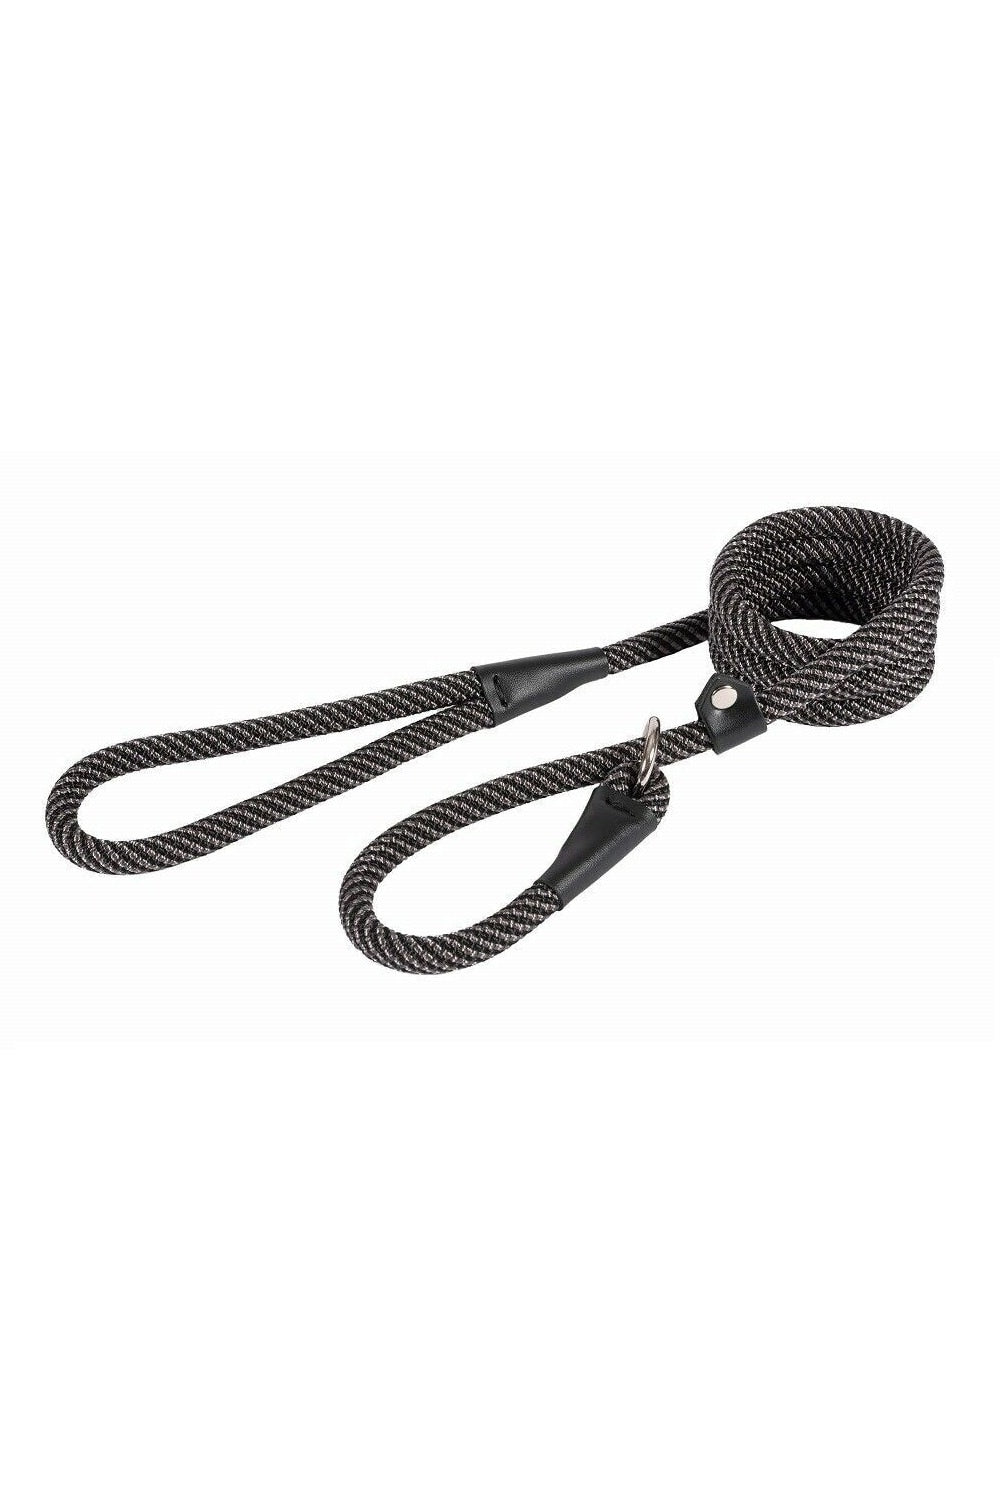 Ancol Dog Lead (Black/Gray) (1.5m x 12mm)